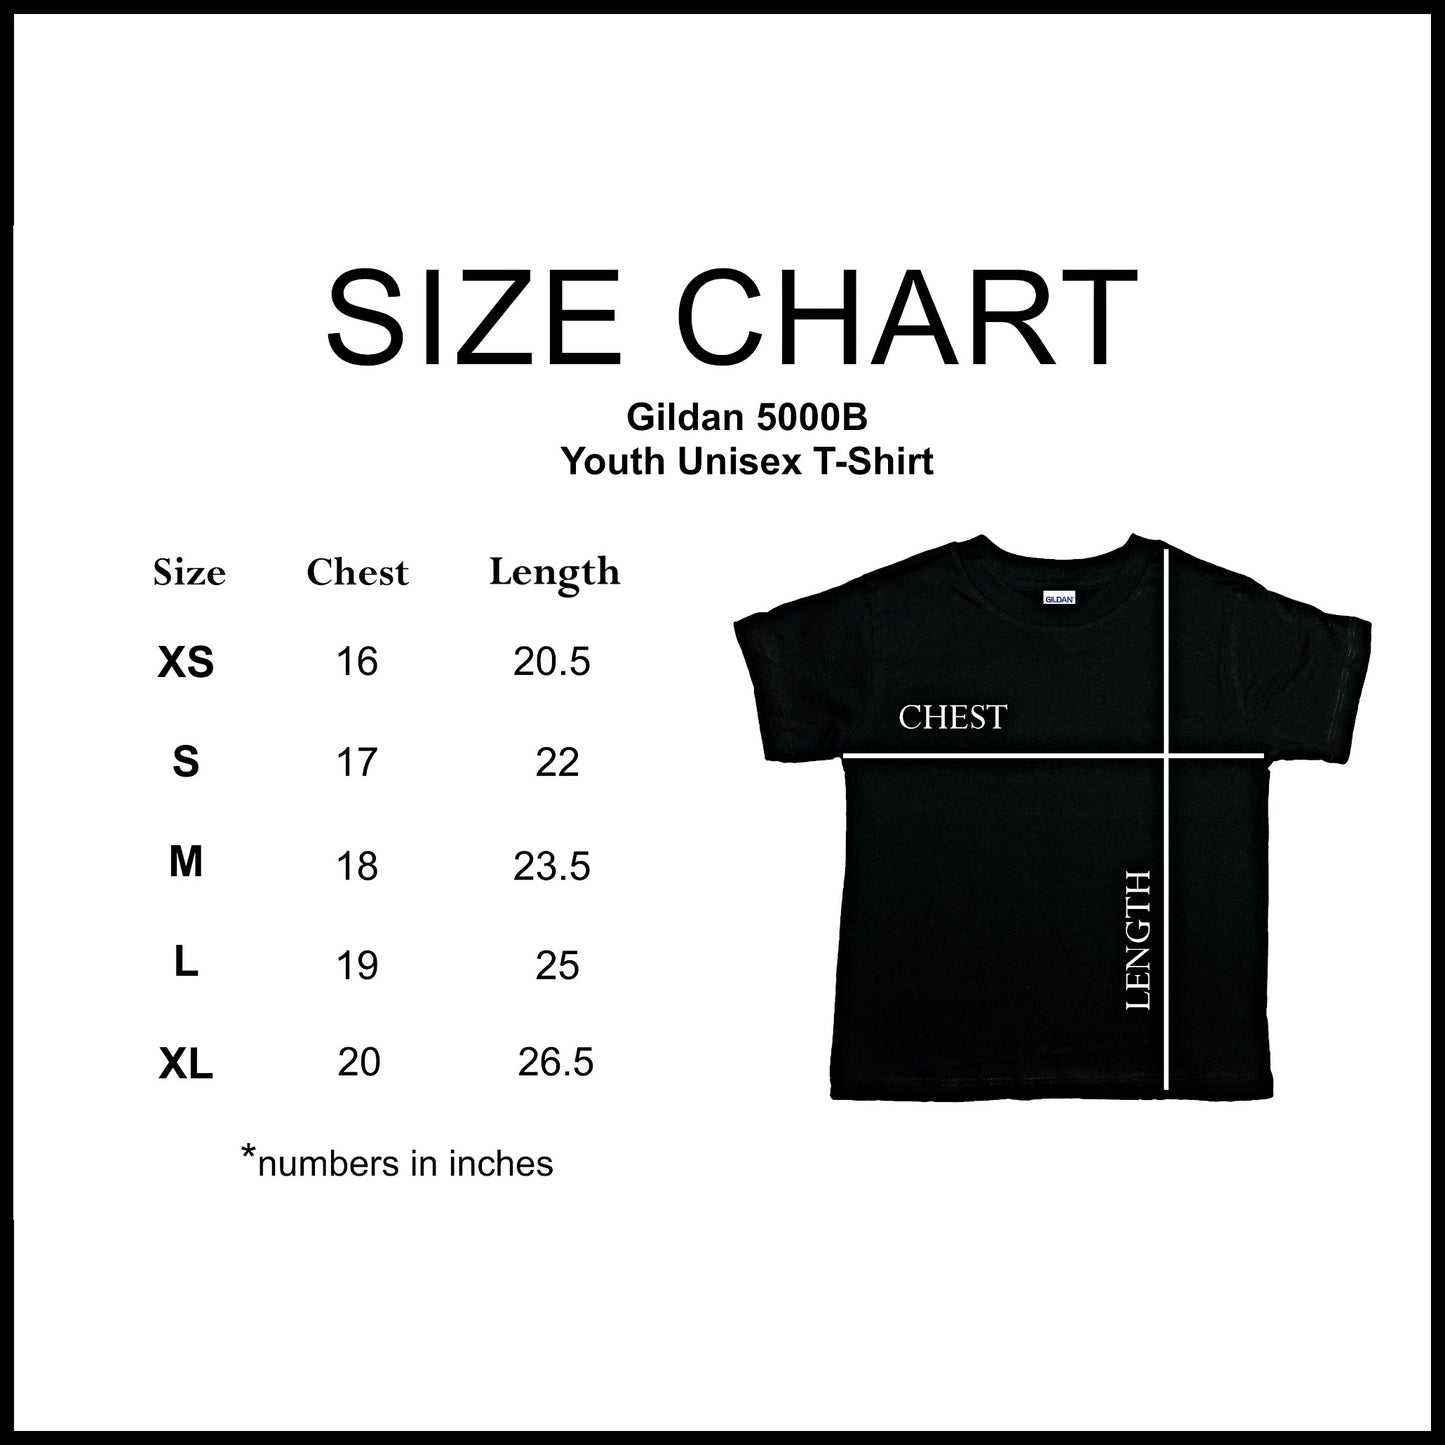 Sizing chart for this Gildan T-shirt